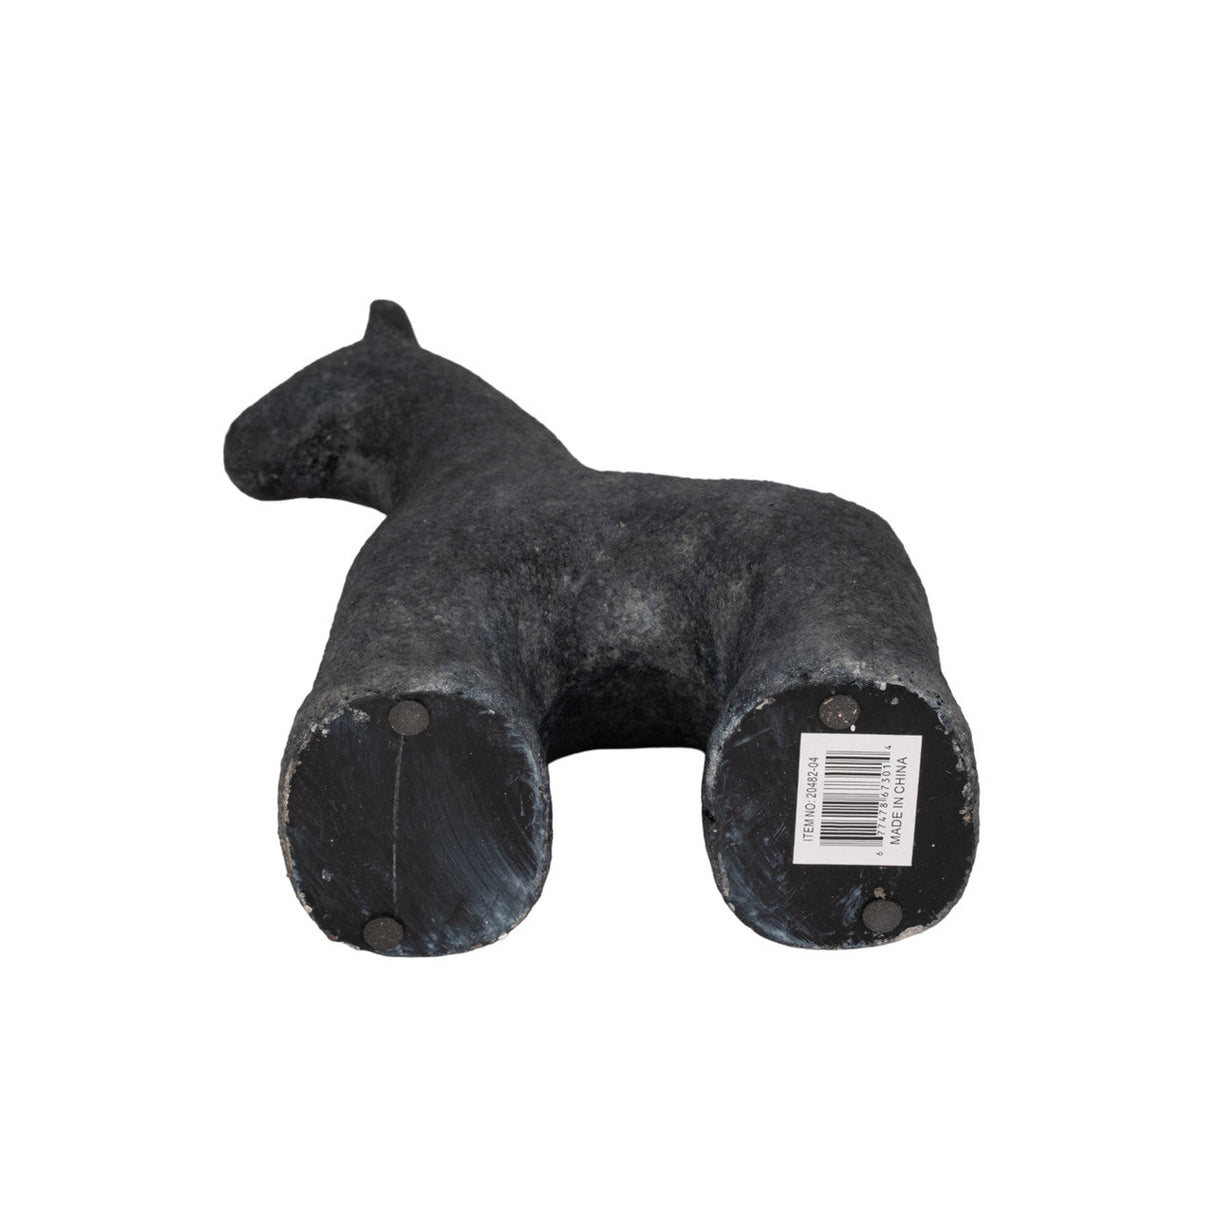 9" Textured Horse, Black